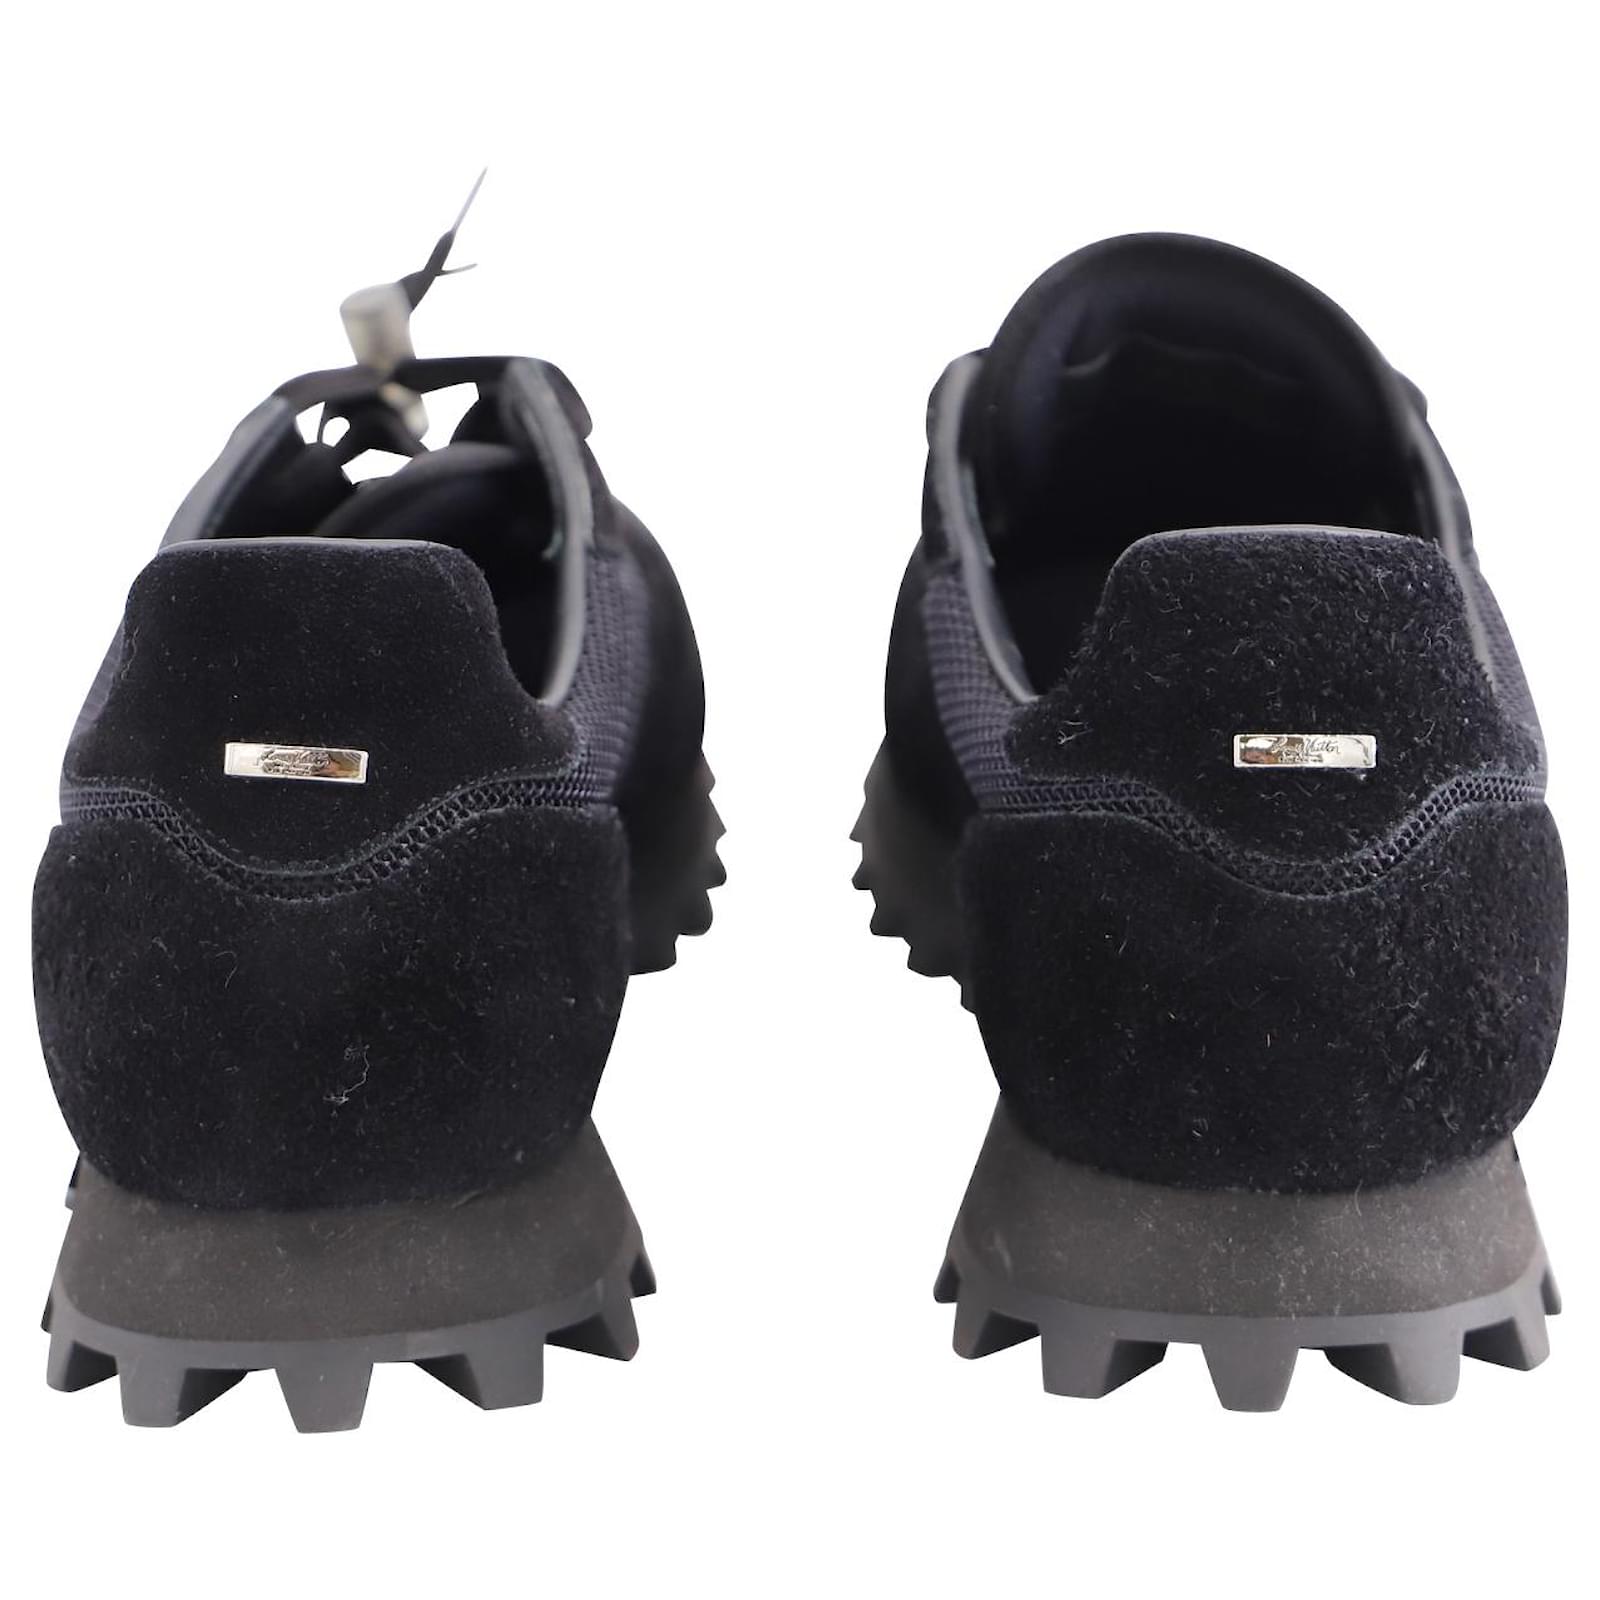 Louis Vuitton Men's Runner Sneakers Mesh and Suede - ShopStyle Flip Flop  Sandals